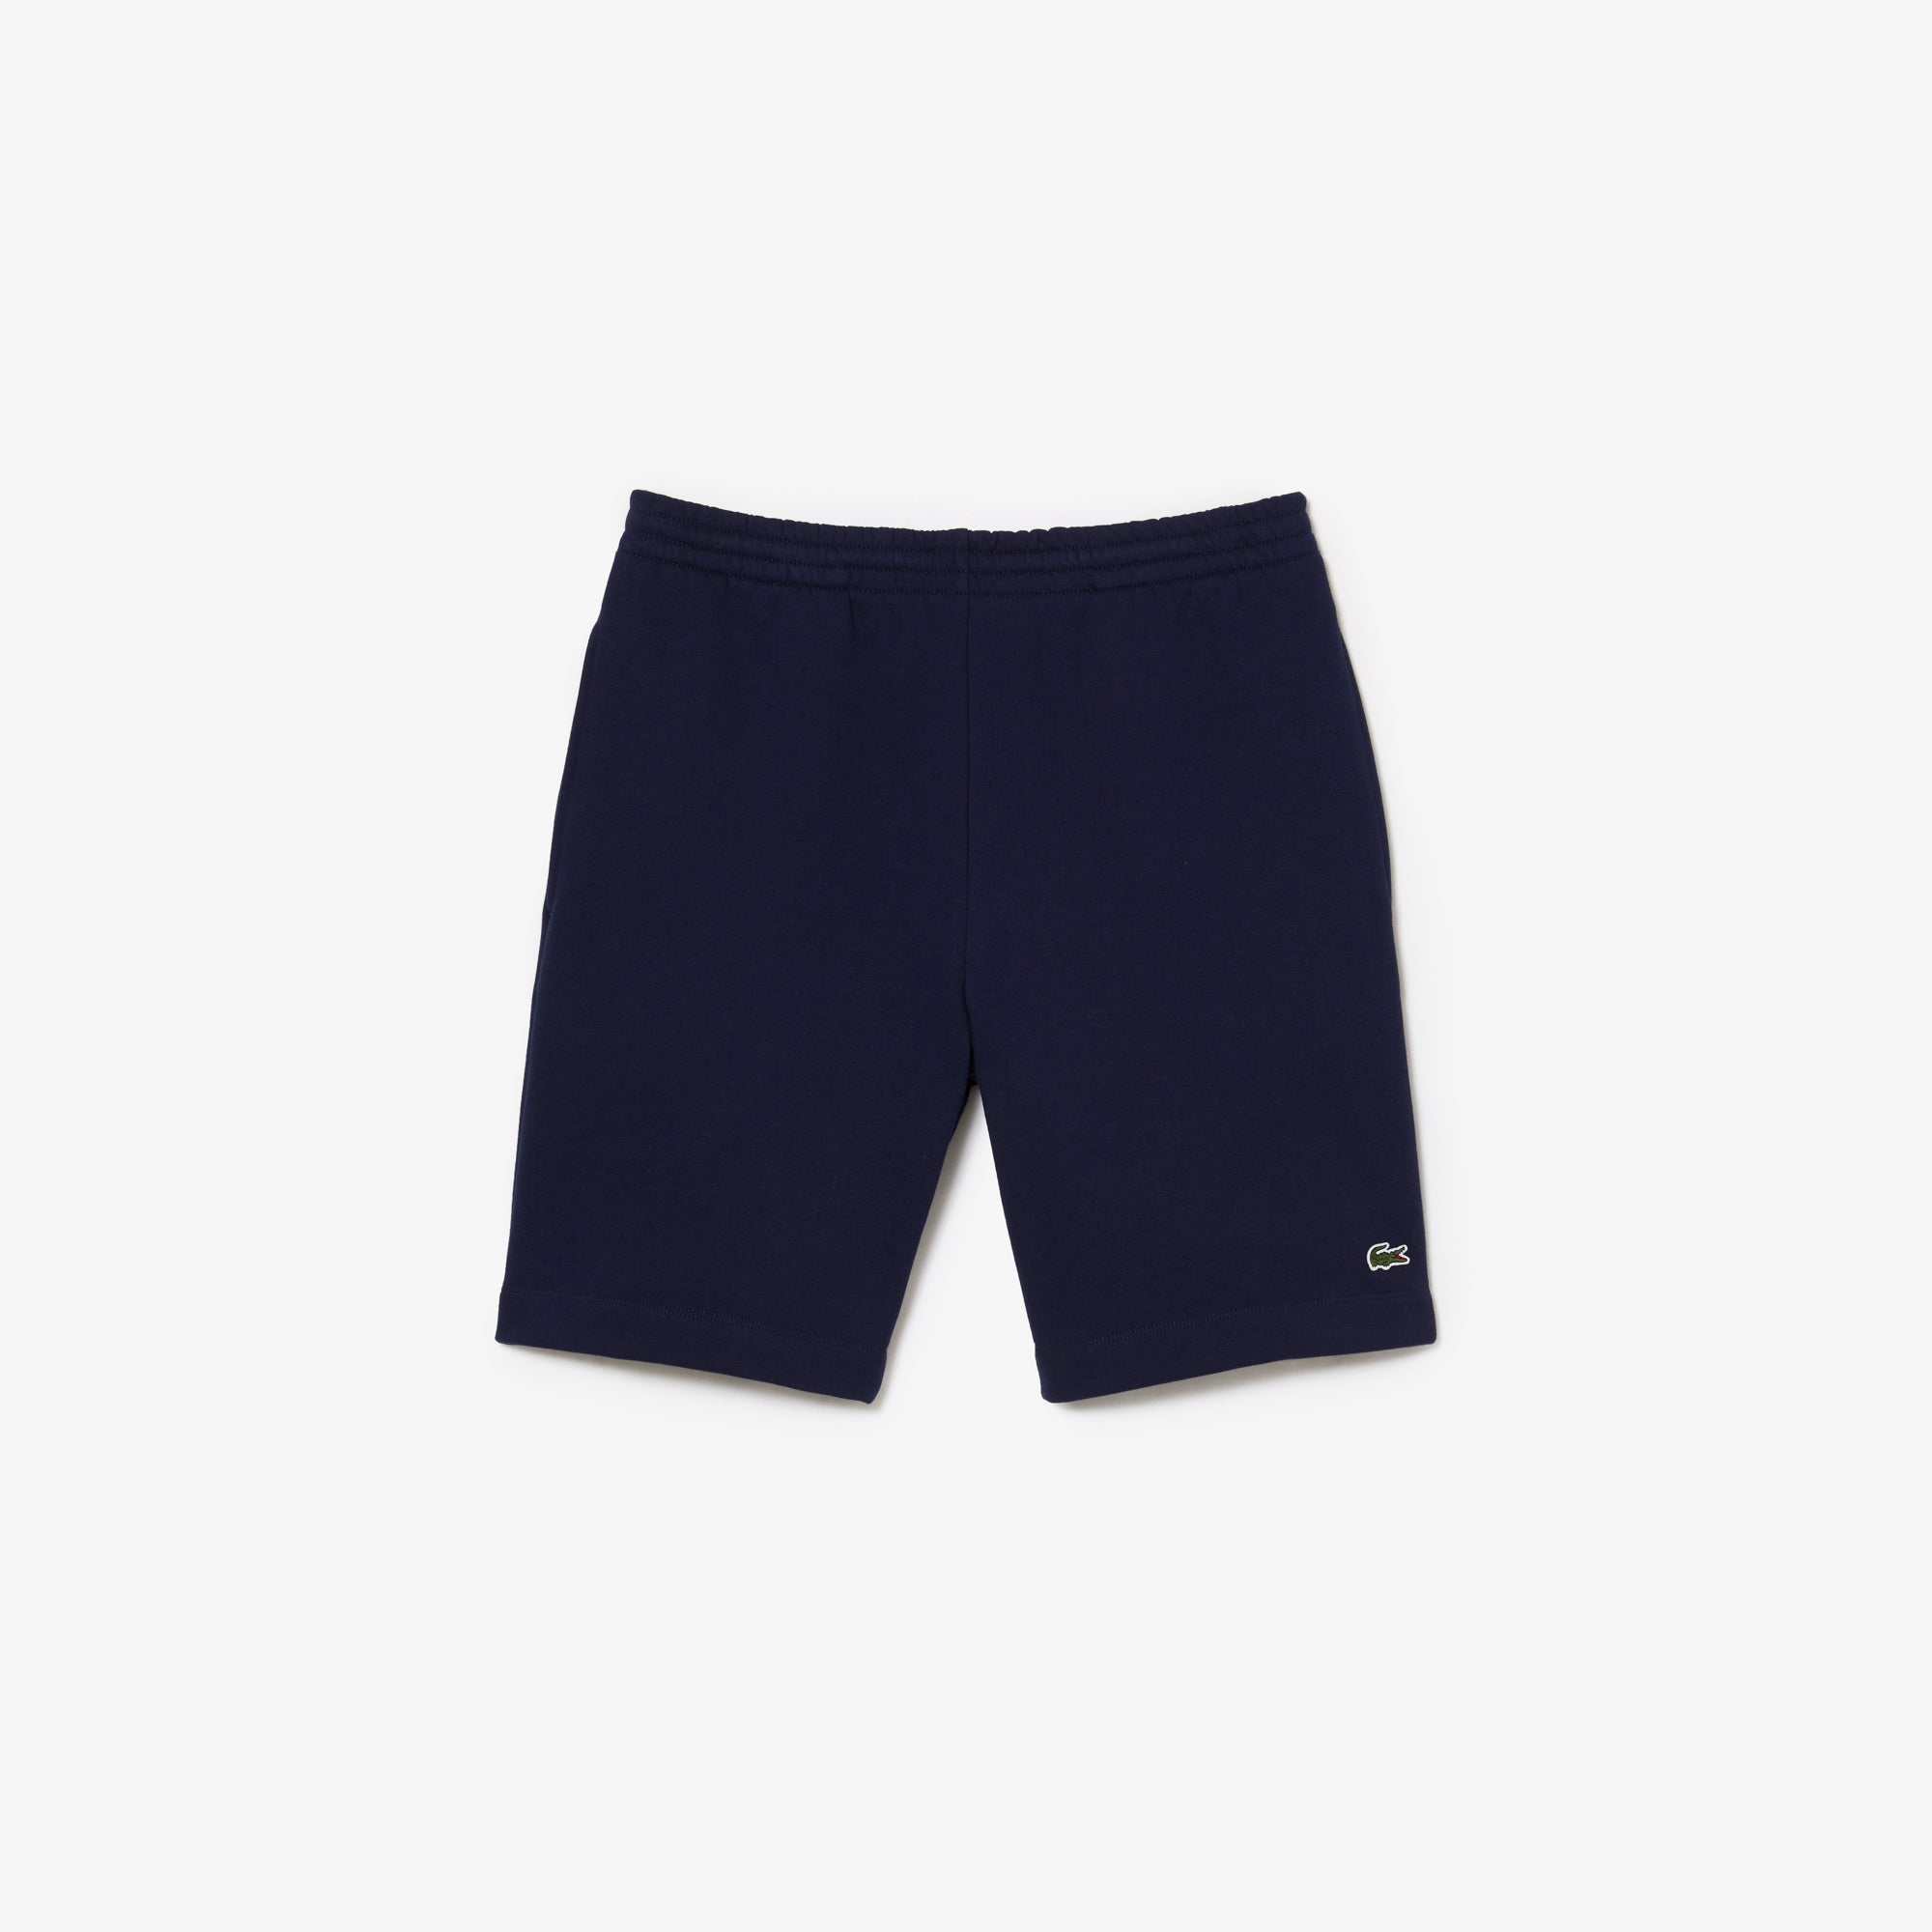 1HG1 Men's shorts - 166 Navy Blue